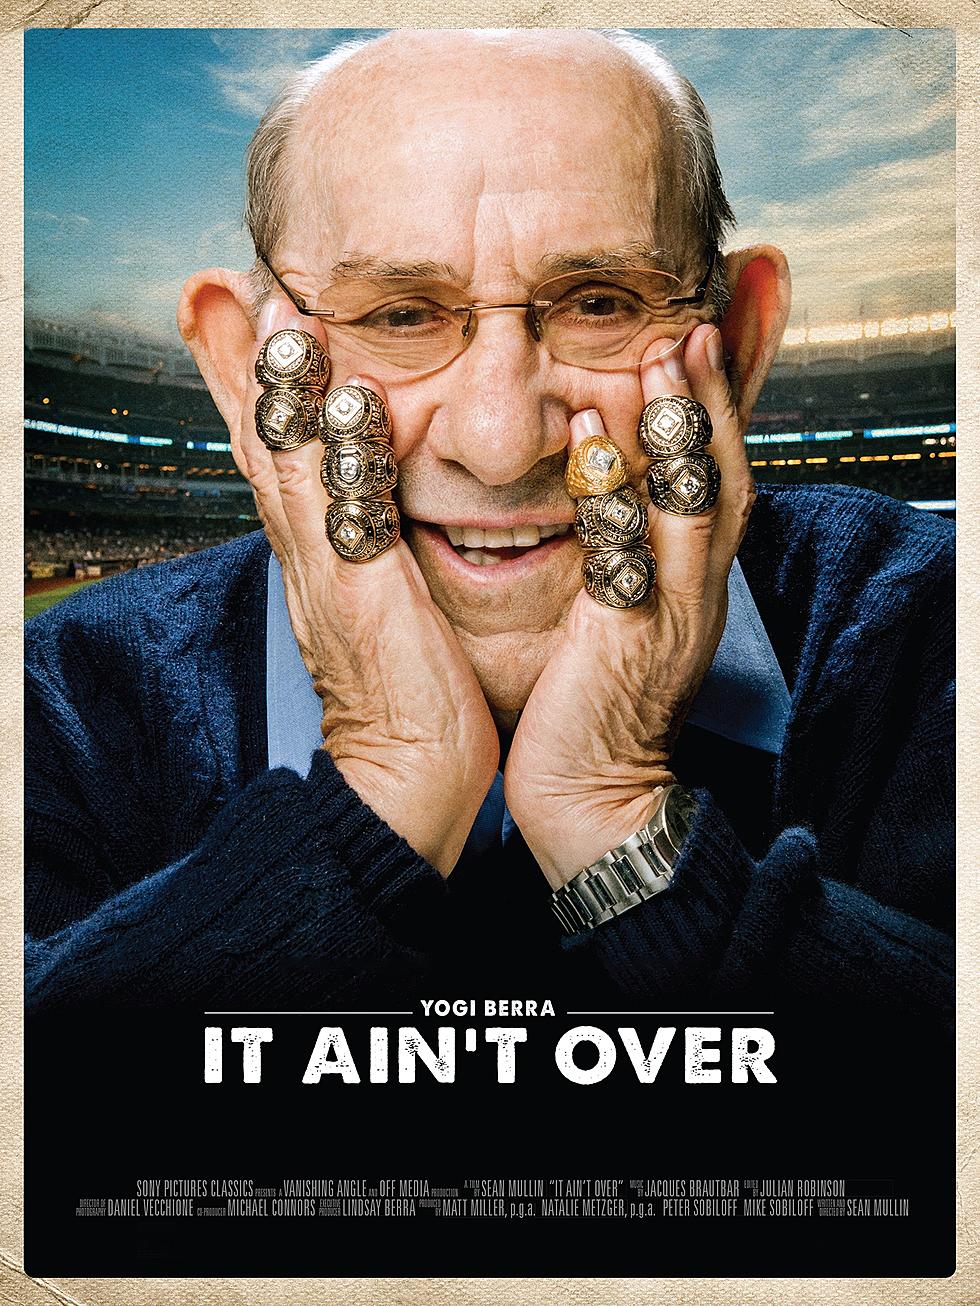 Yogi Berra documentary to be shown in special screening at The Clairidge